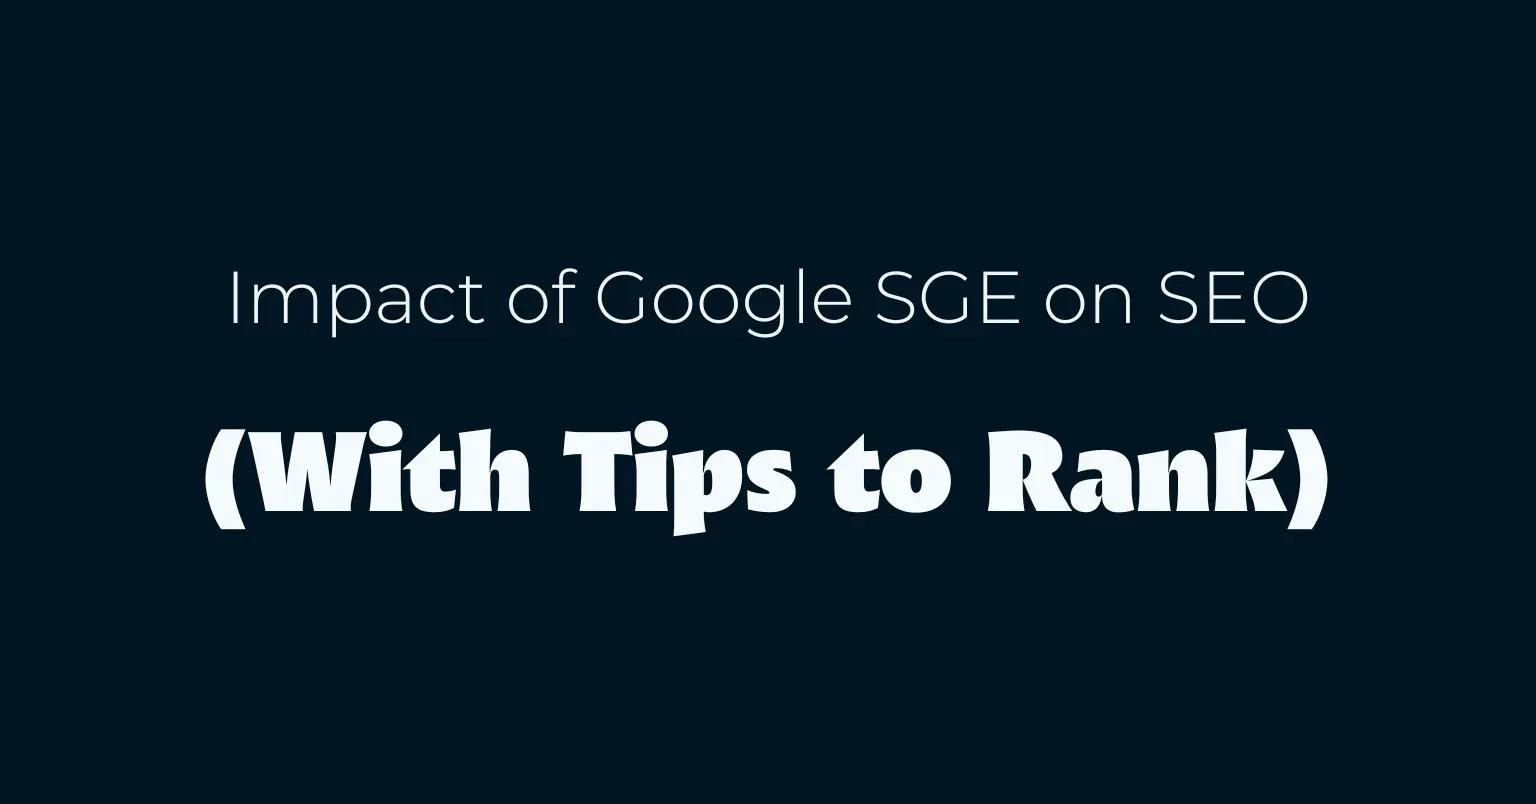 Impact of Google SGE on SEO